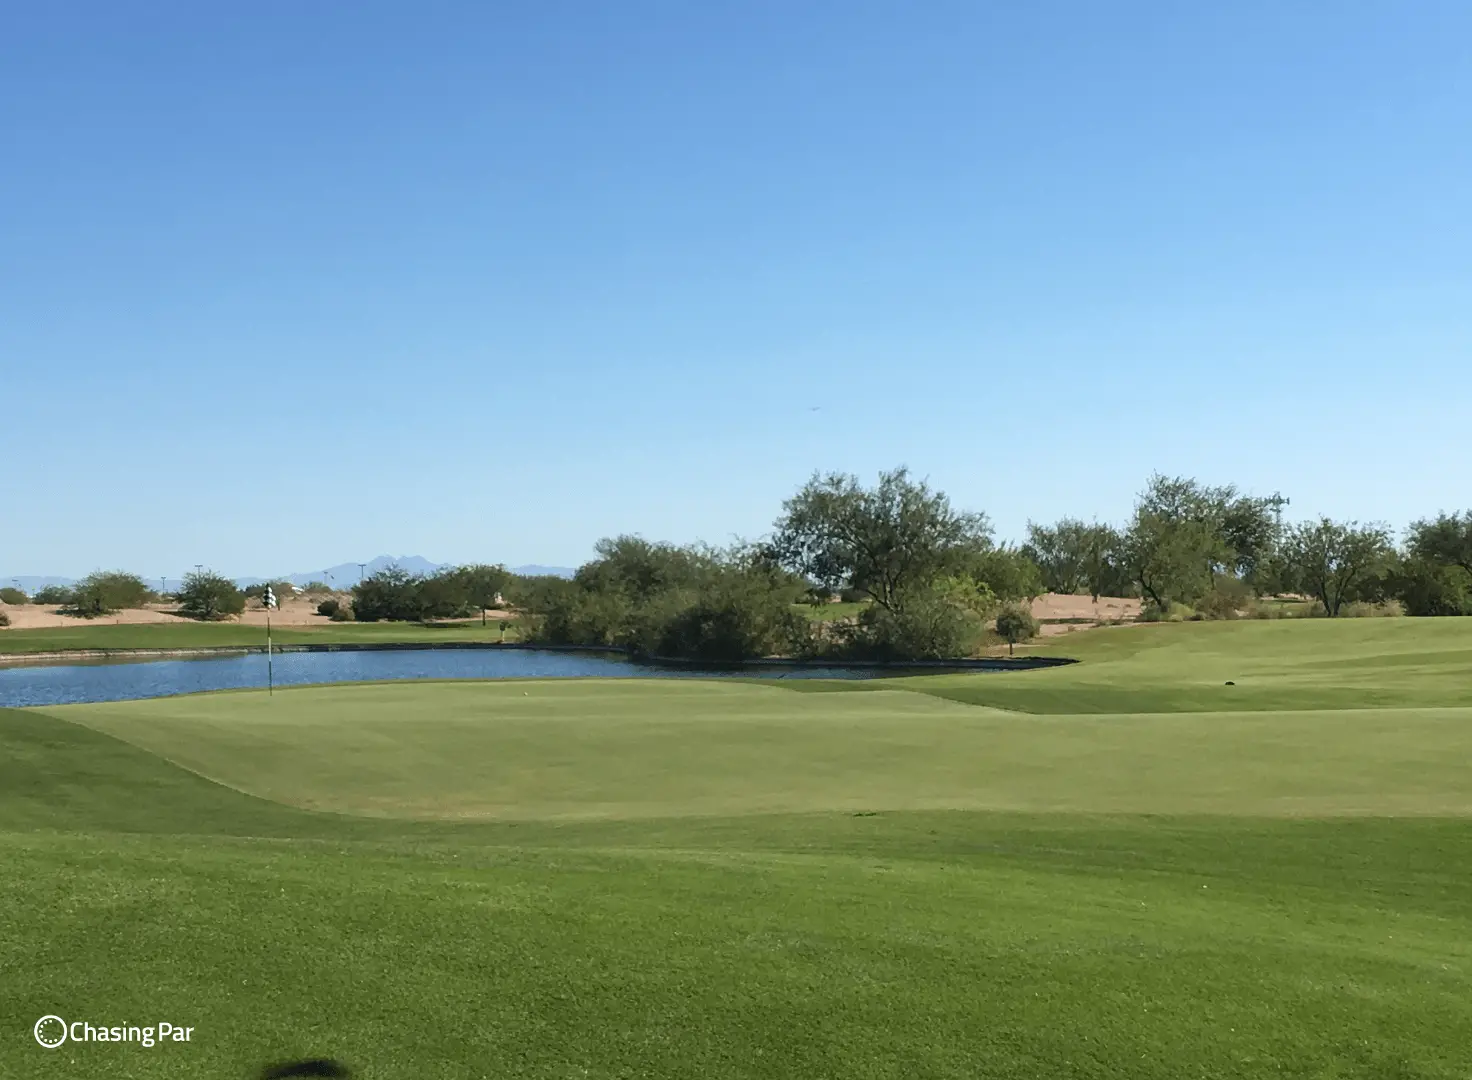 Michael Leonard Chasing Par at Whirlwind Arizona Top Golf Course